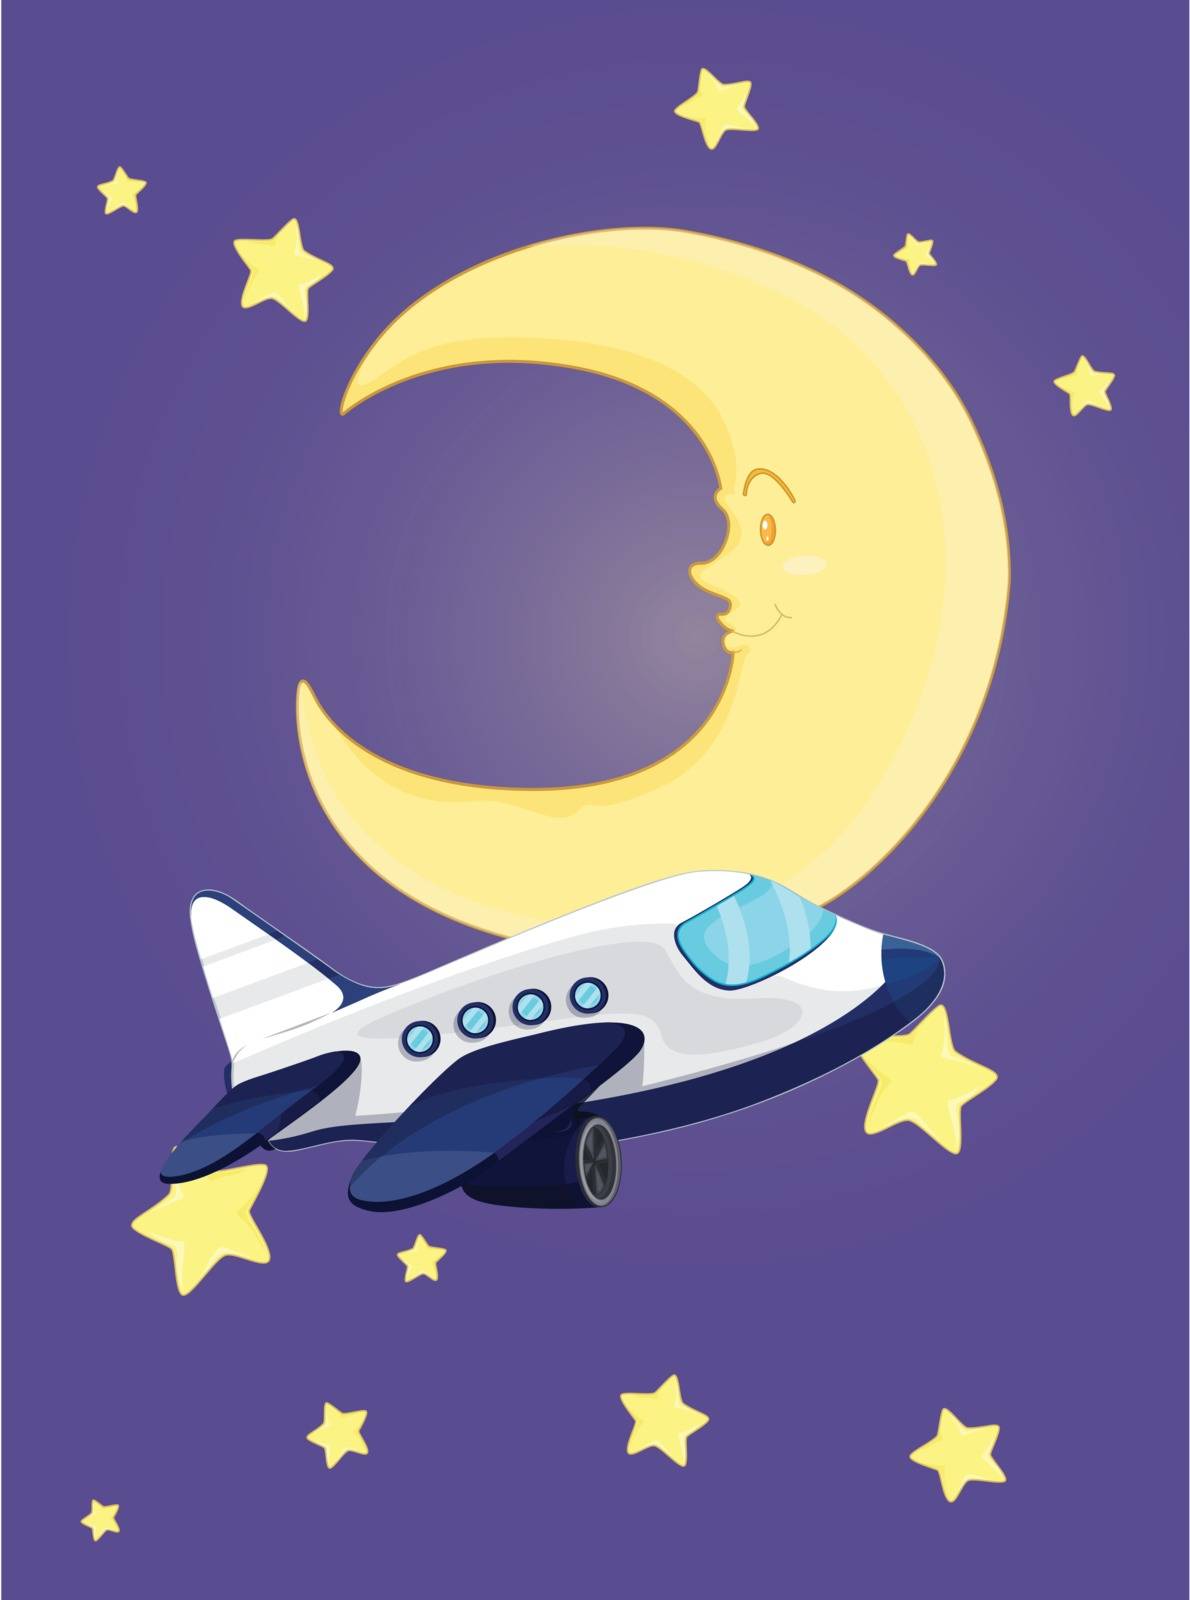 Illustration of plane flying at night